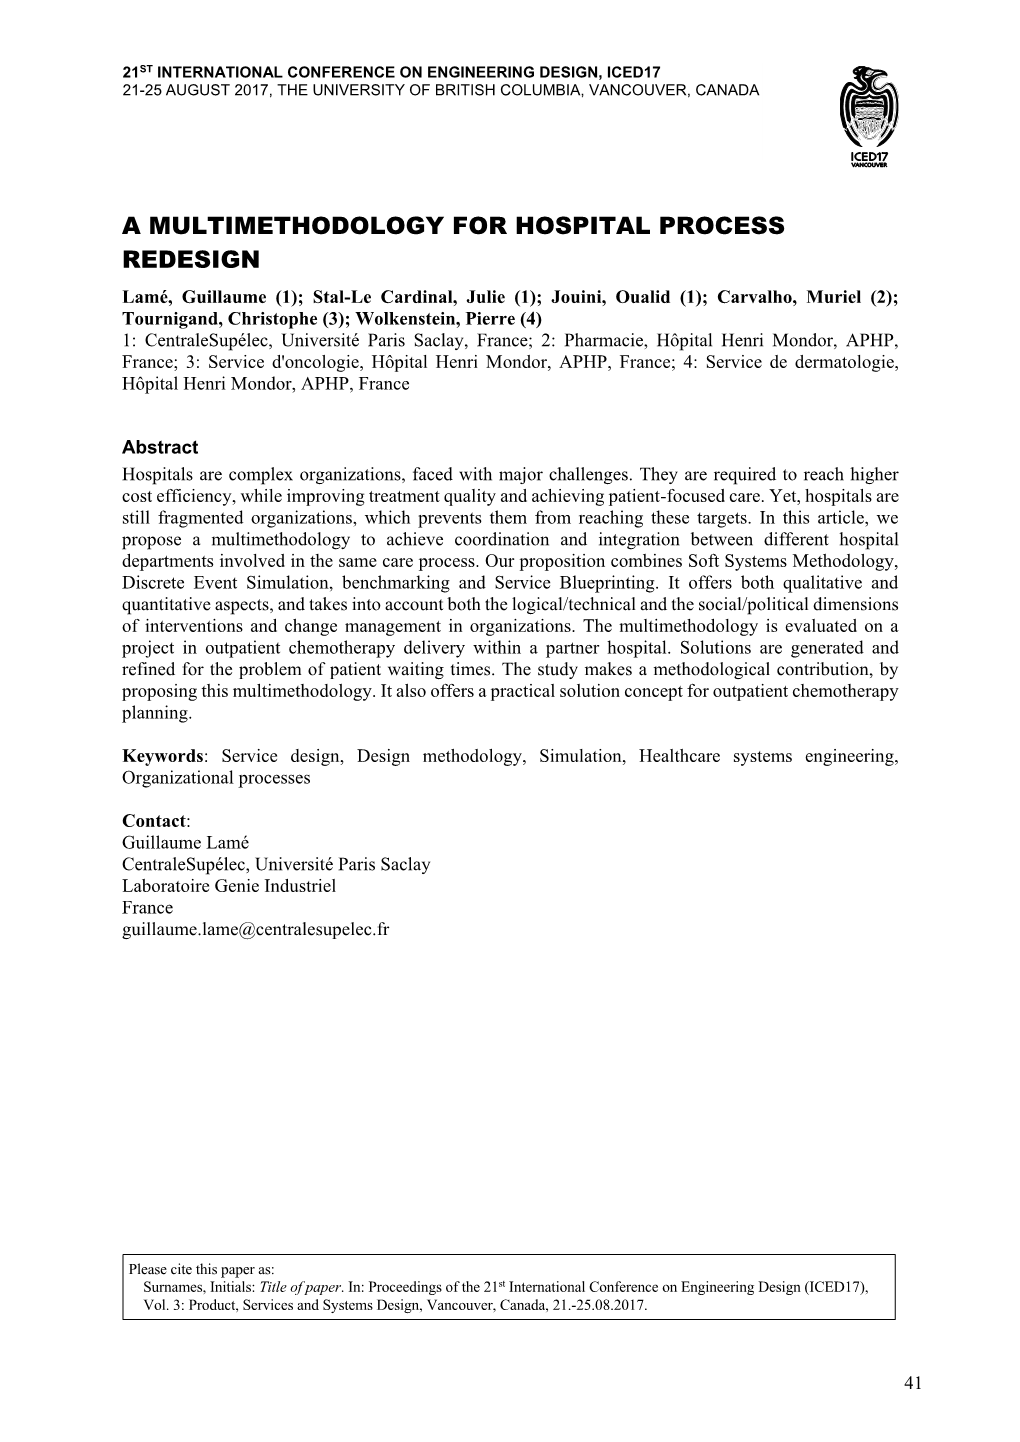 A Multimethodology for Hospital Process Redesign